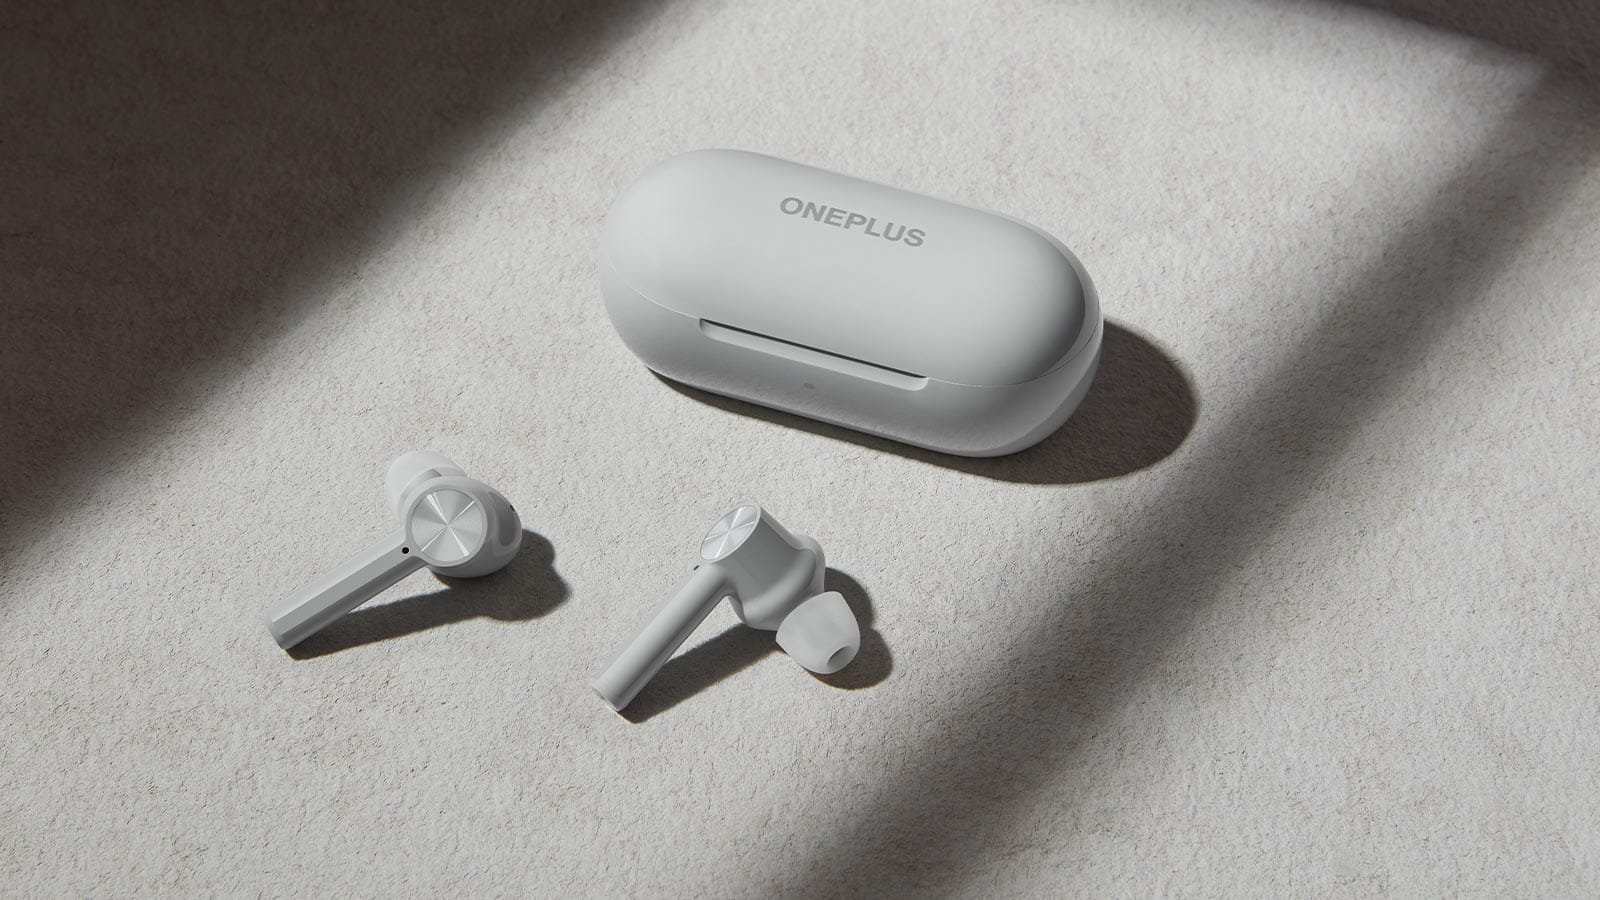 OnePlus Buds Z true wireless earbuds offer powerful bass boost